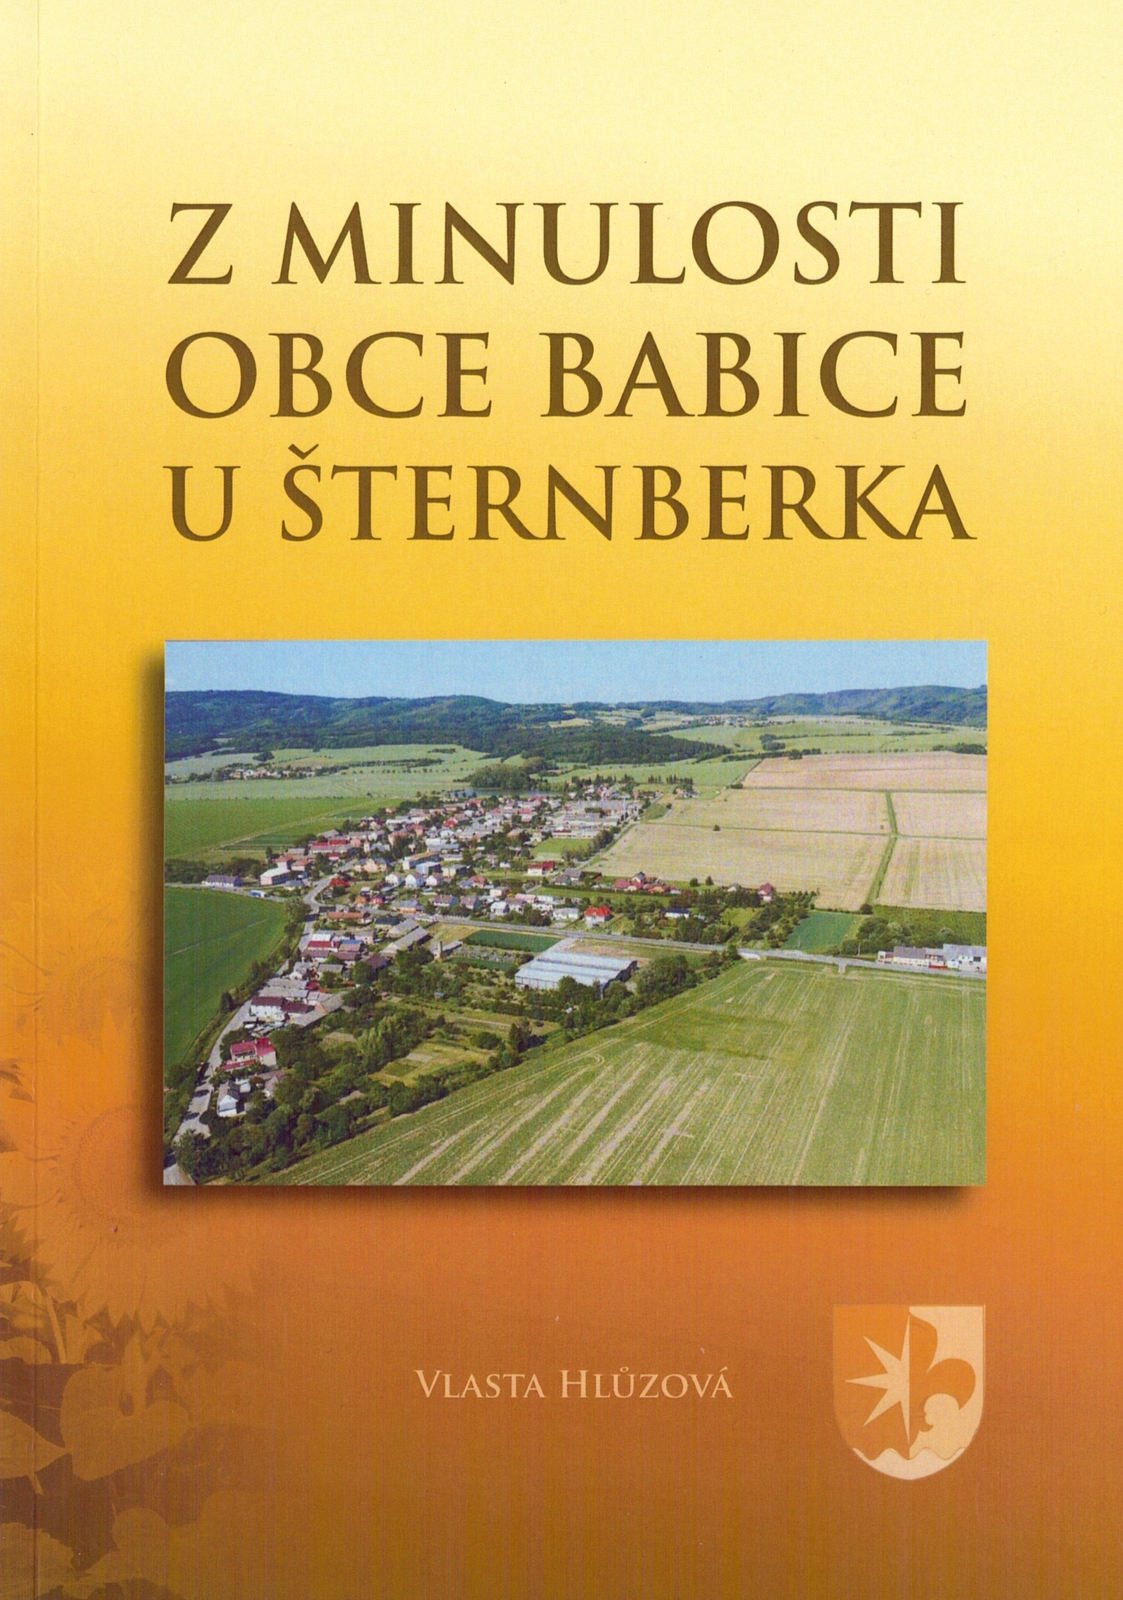 Kniha - Z minulosti obce Babice u Šternberka.jpg